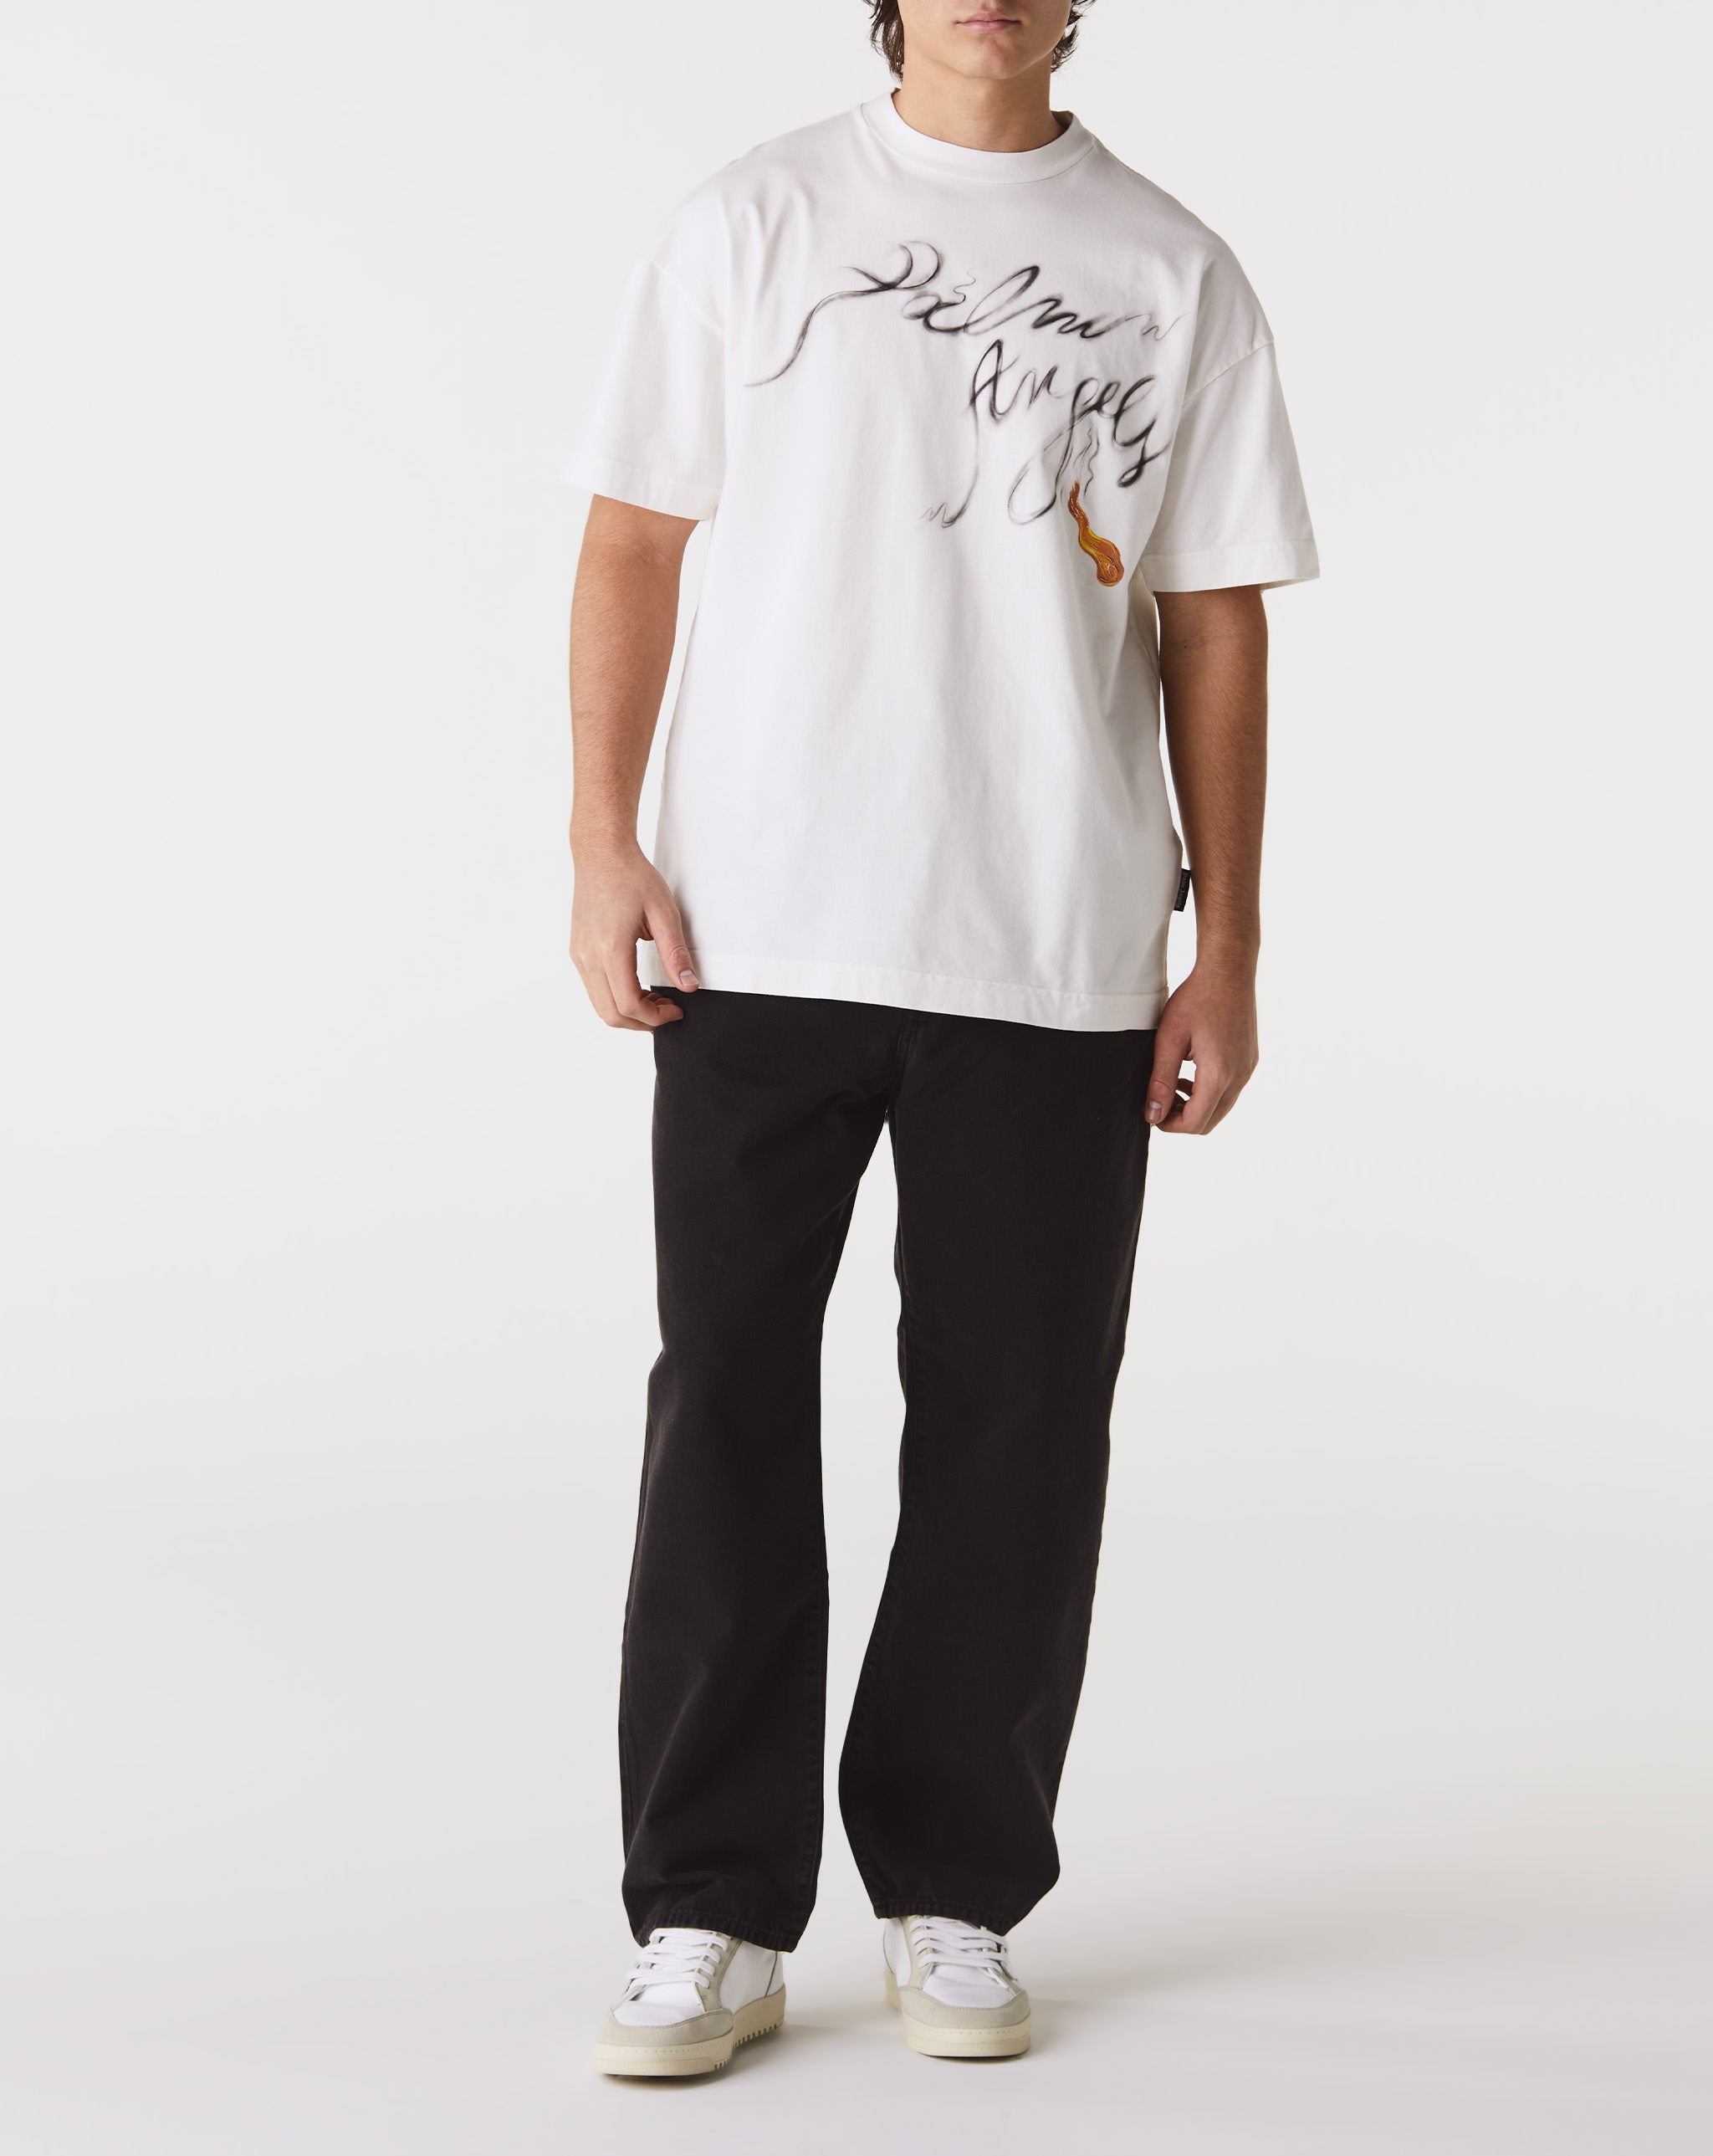 Palm Angels Palm Angels Streetwear and High Fashion Collide  - Cheap Erlebniswelt-fliegenfischen Jordan outlet